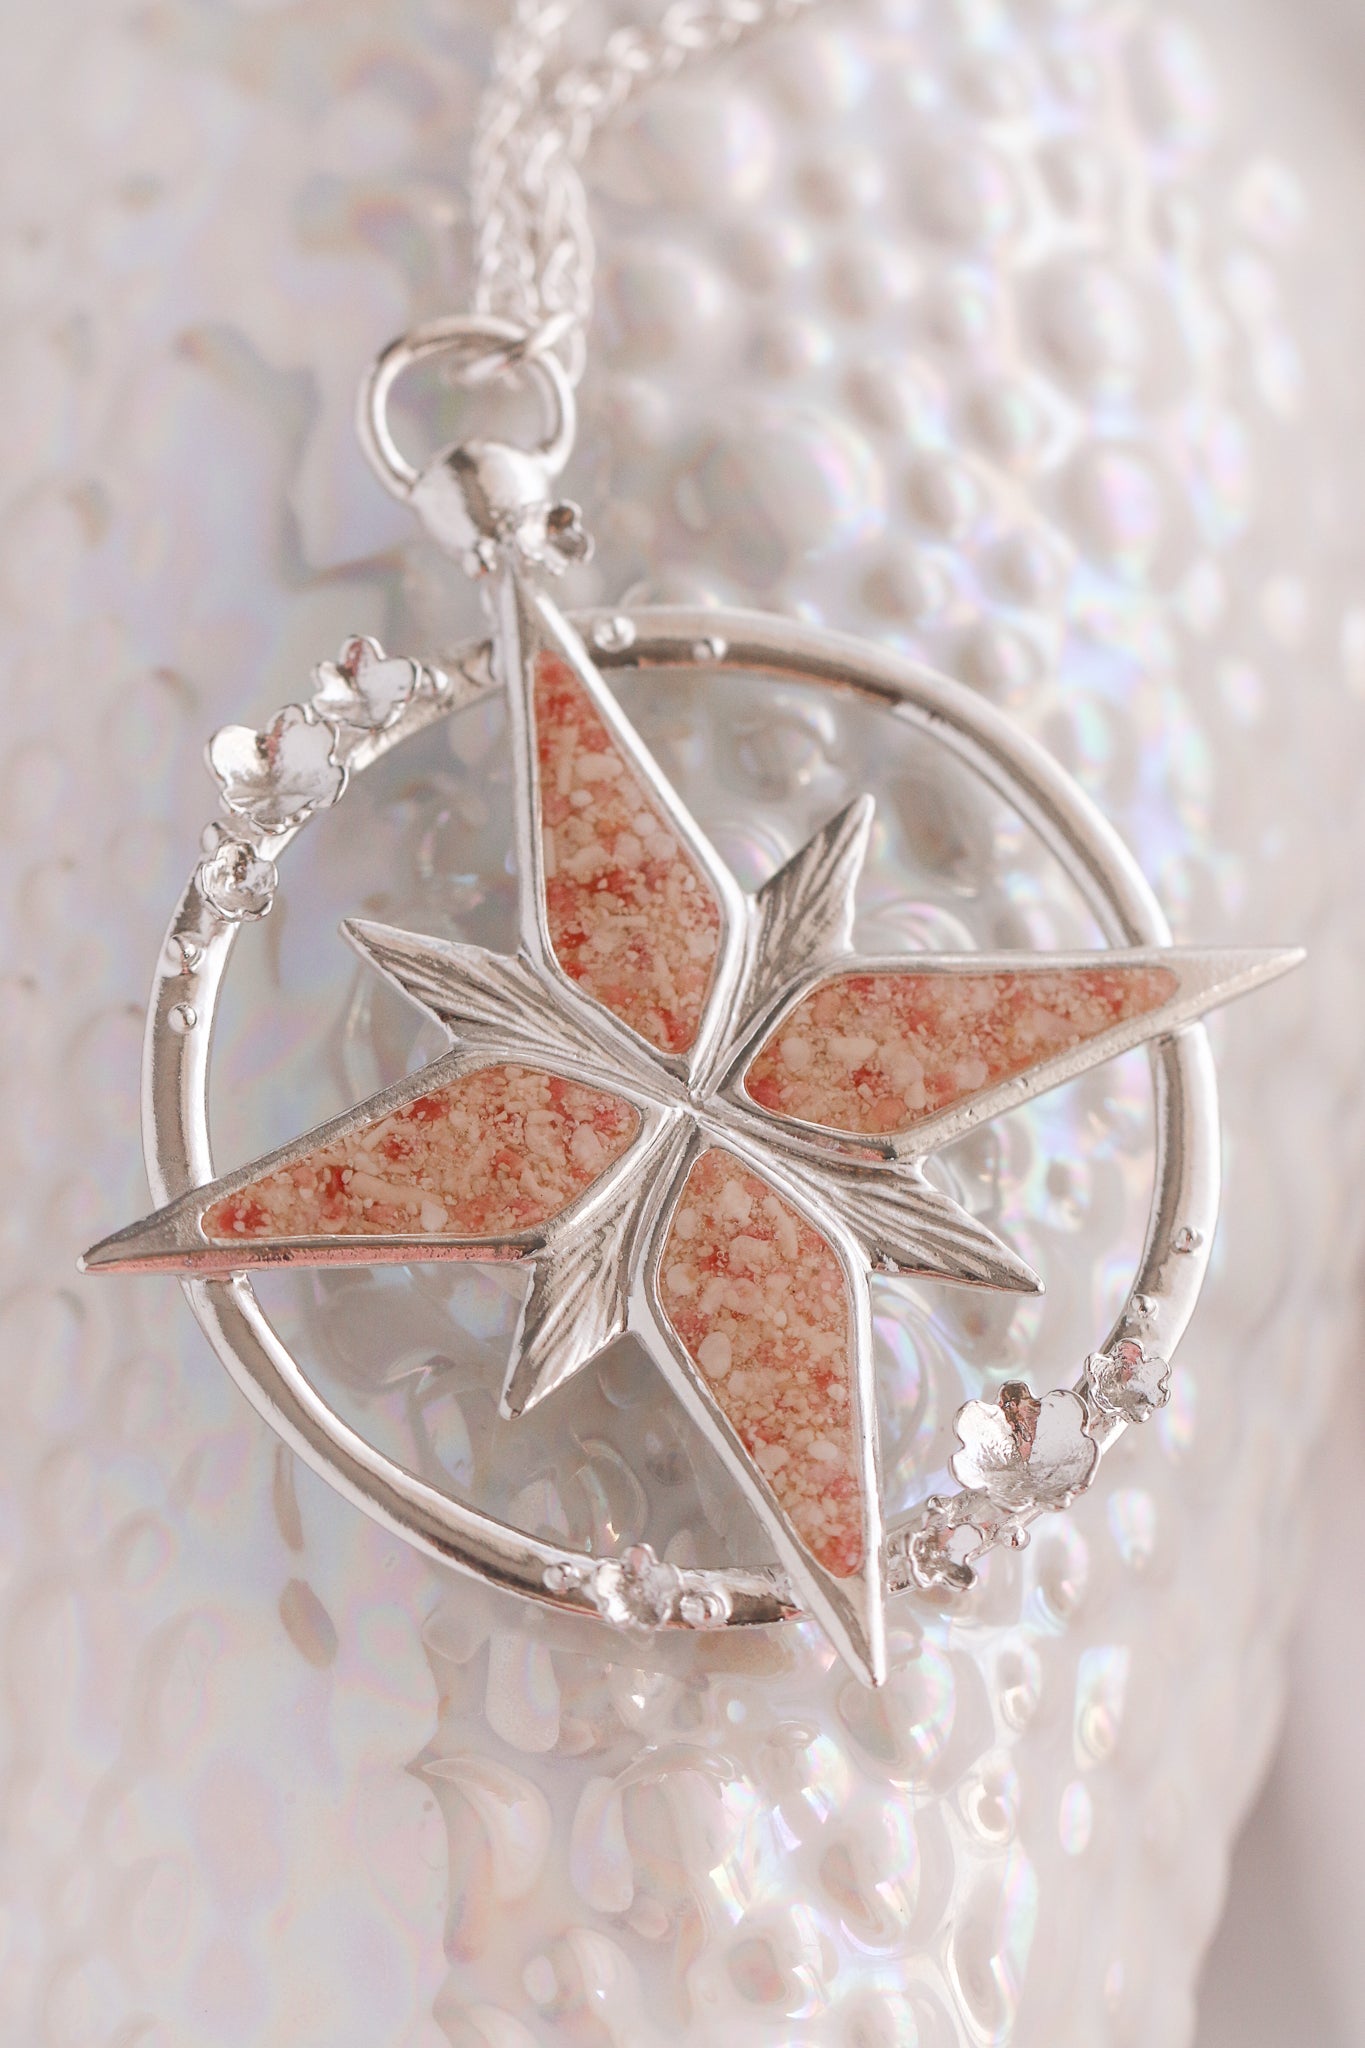 Compass Rose ~ 2020 Ornament / Pendant